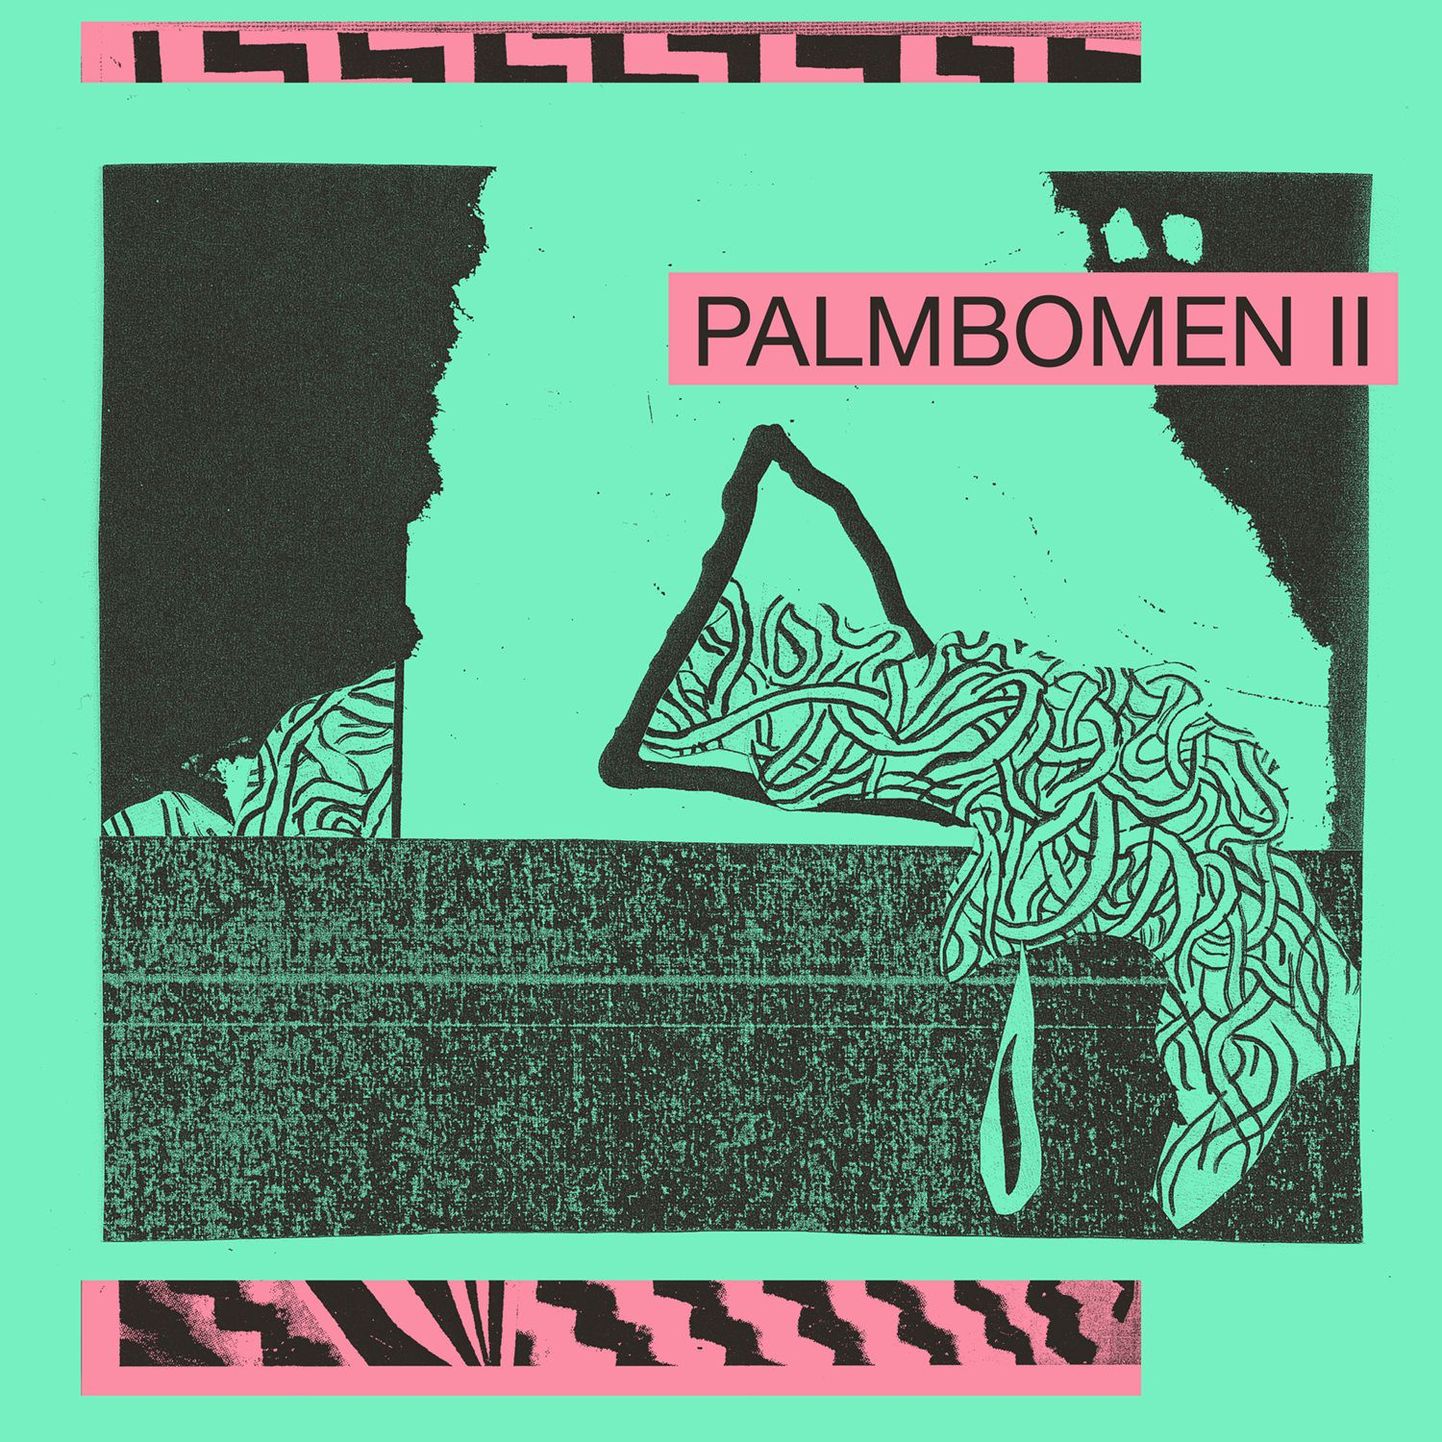 Palmbomen II- Palmbomen II